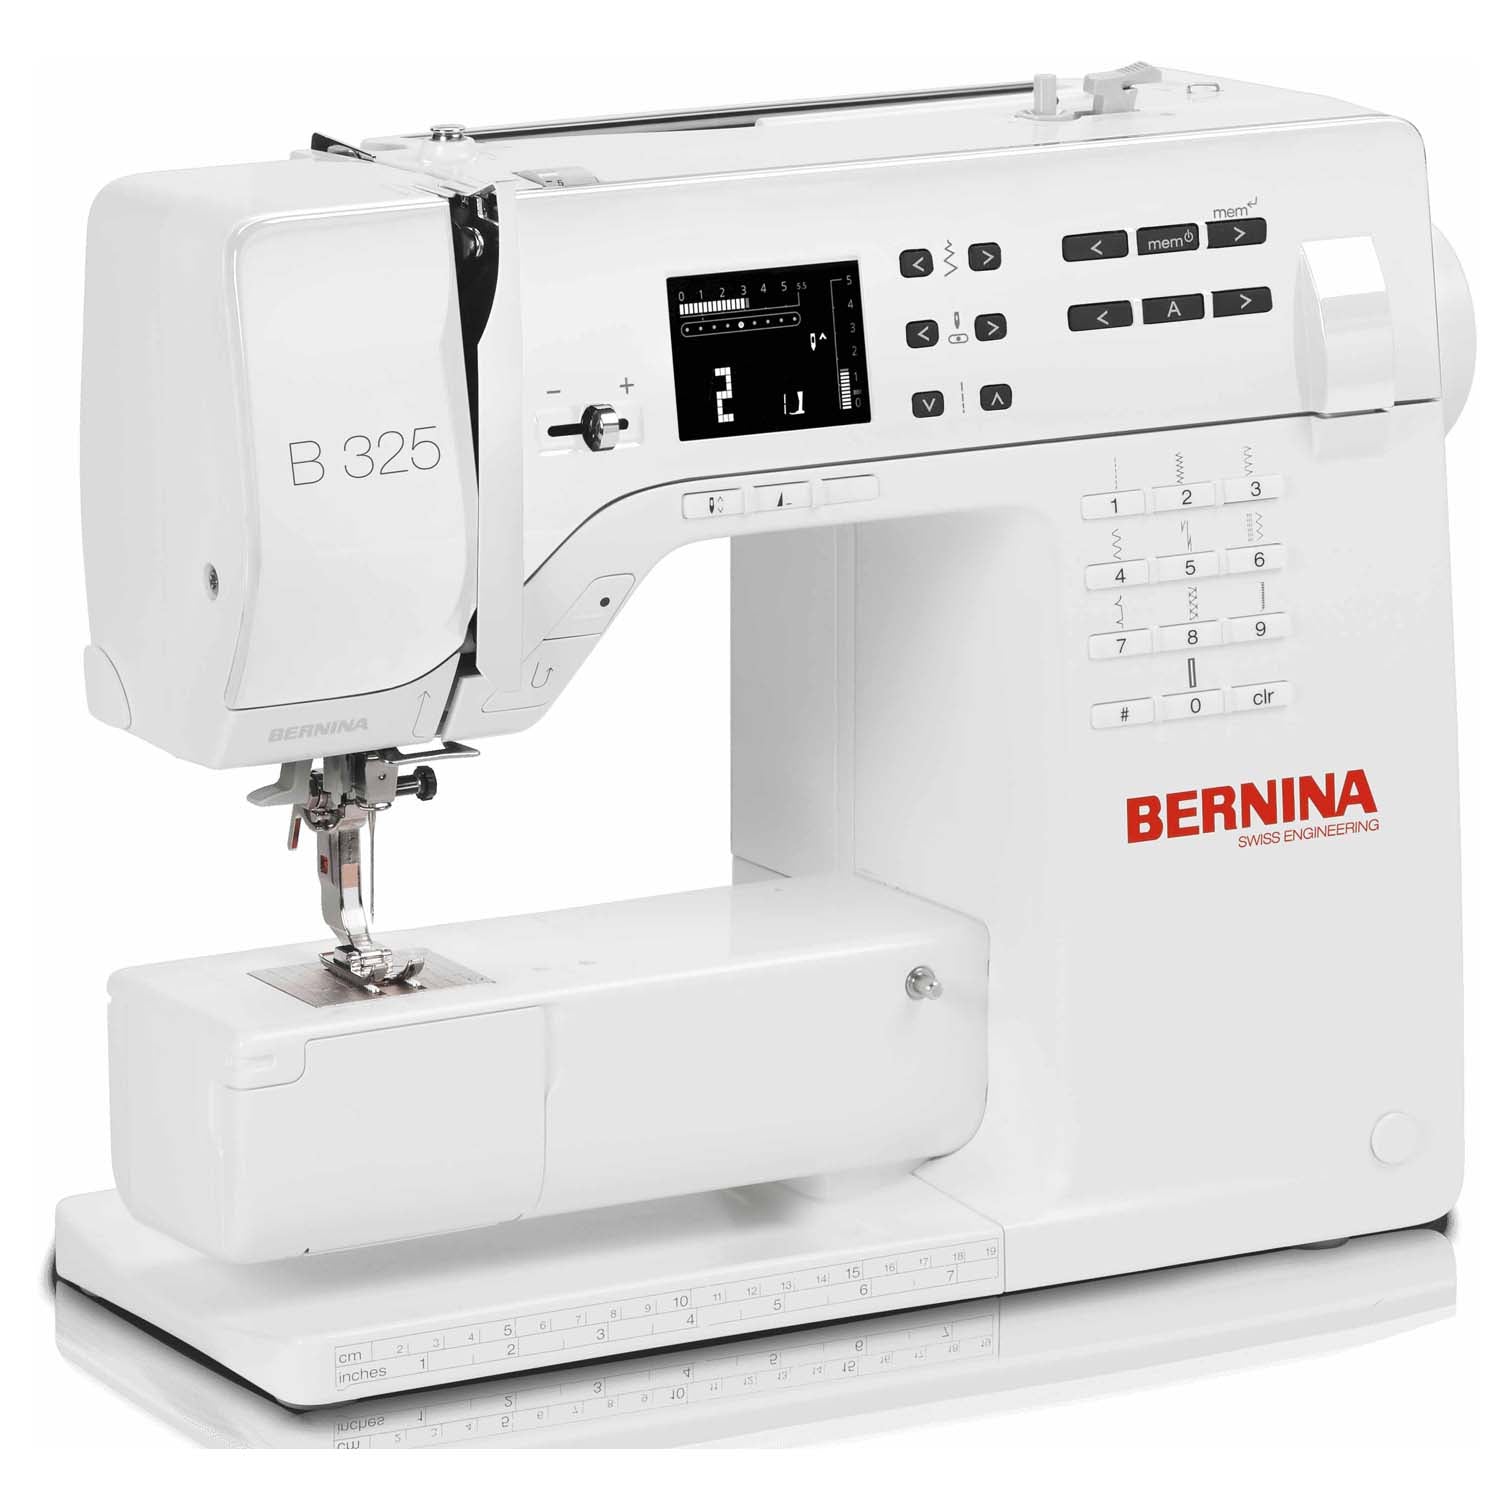 BERNINA 325 Sewing Machine